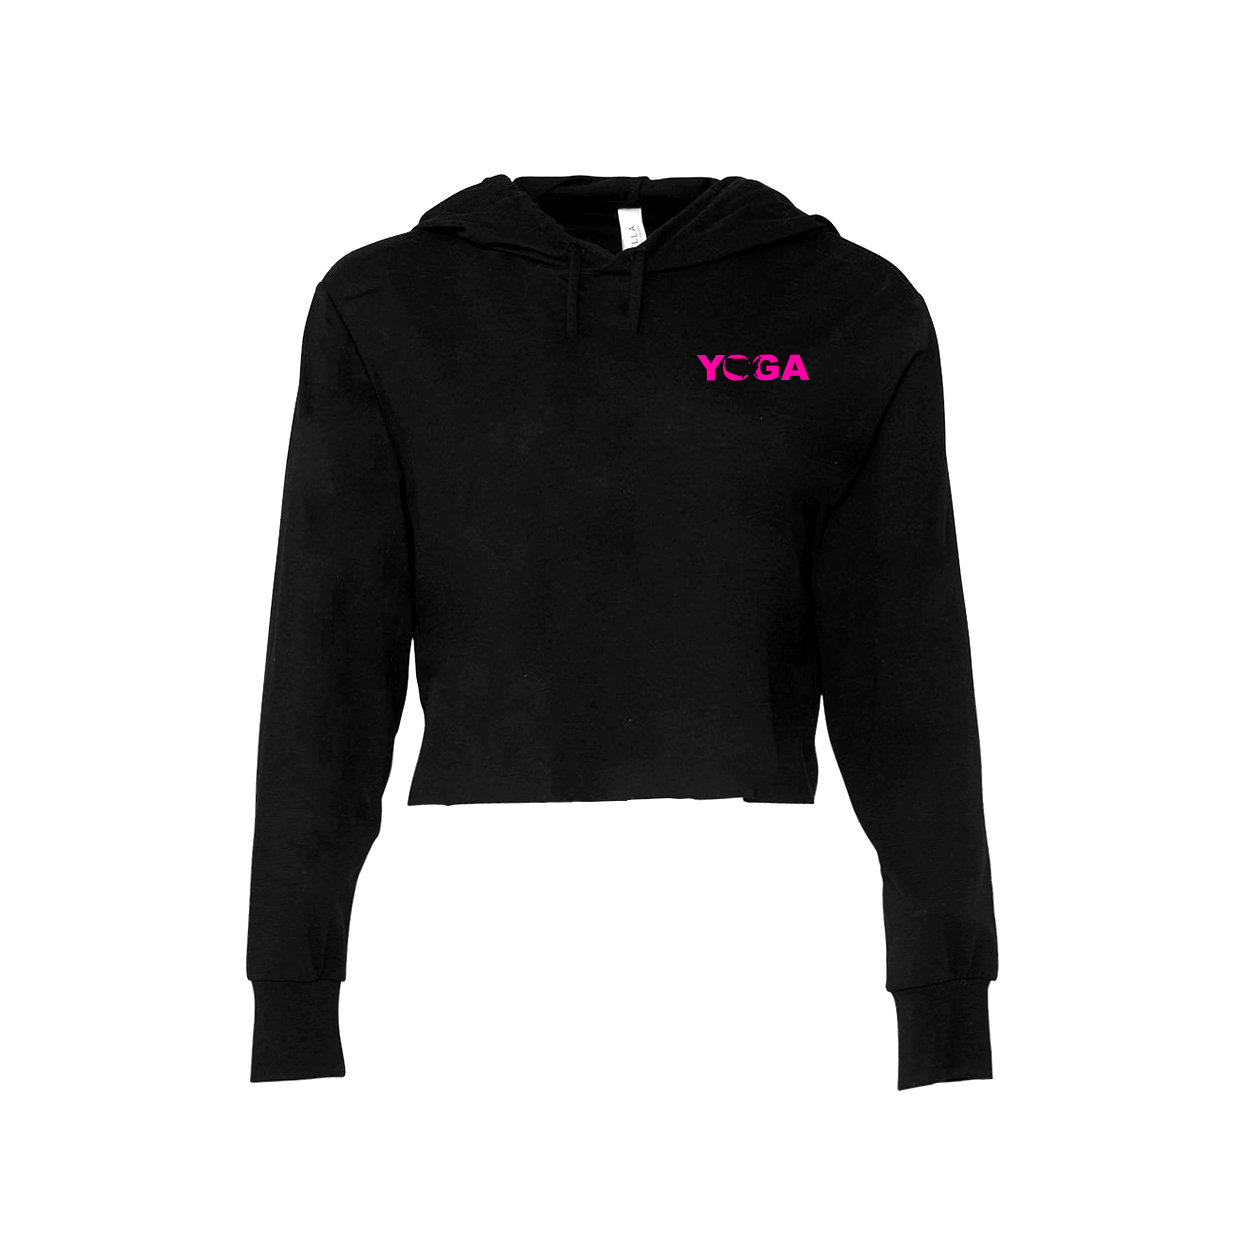 Yoga United States Night Out Womens Cropped Sweatshirt Black (Pink Logo)